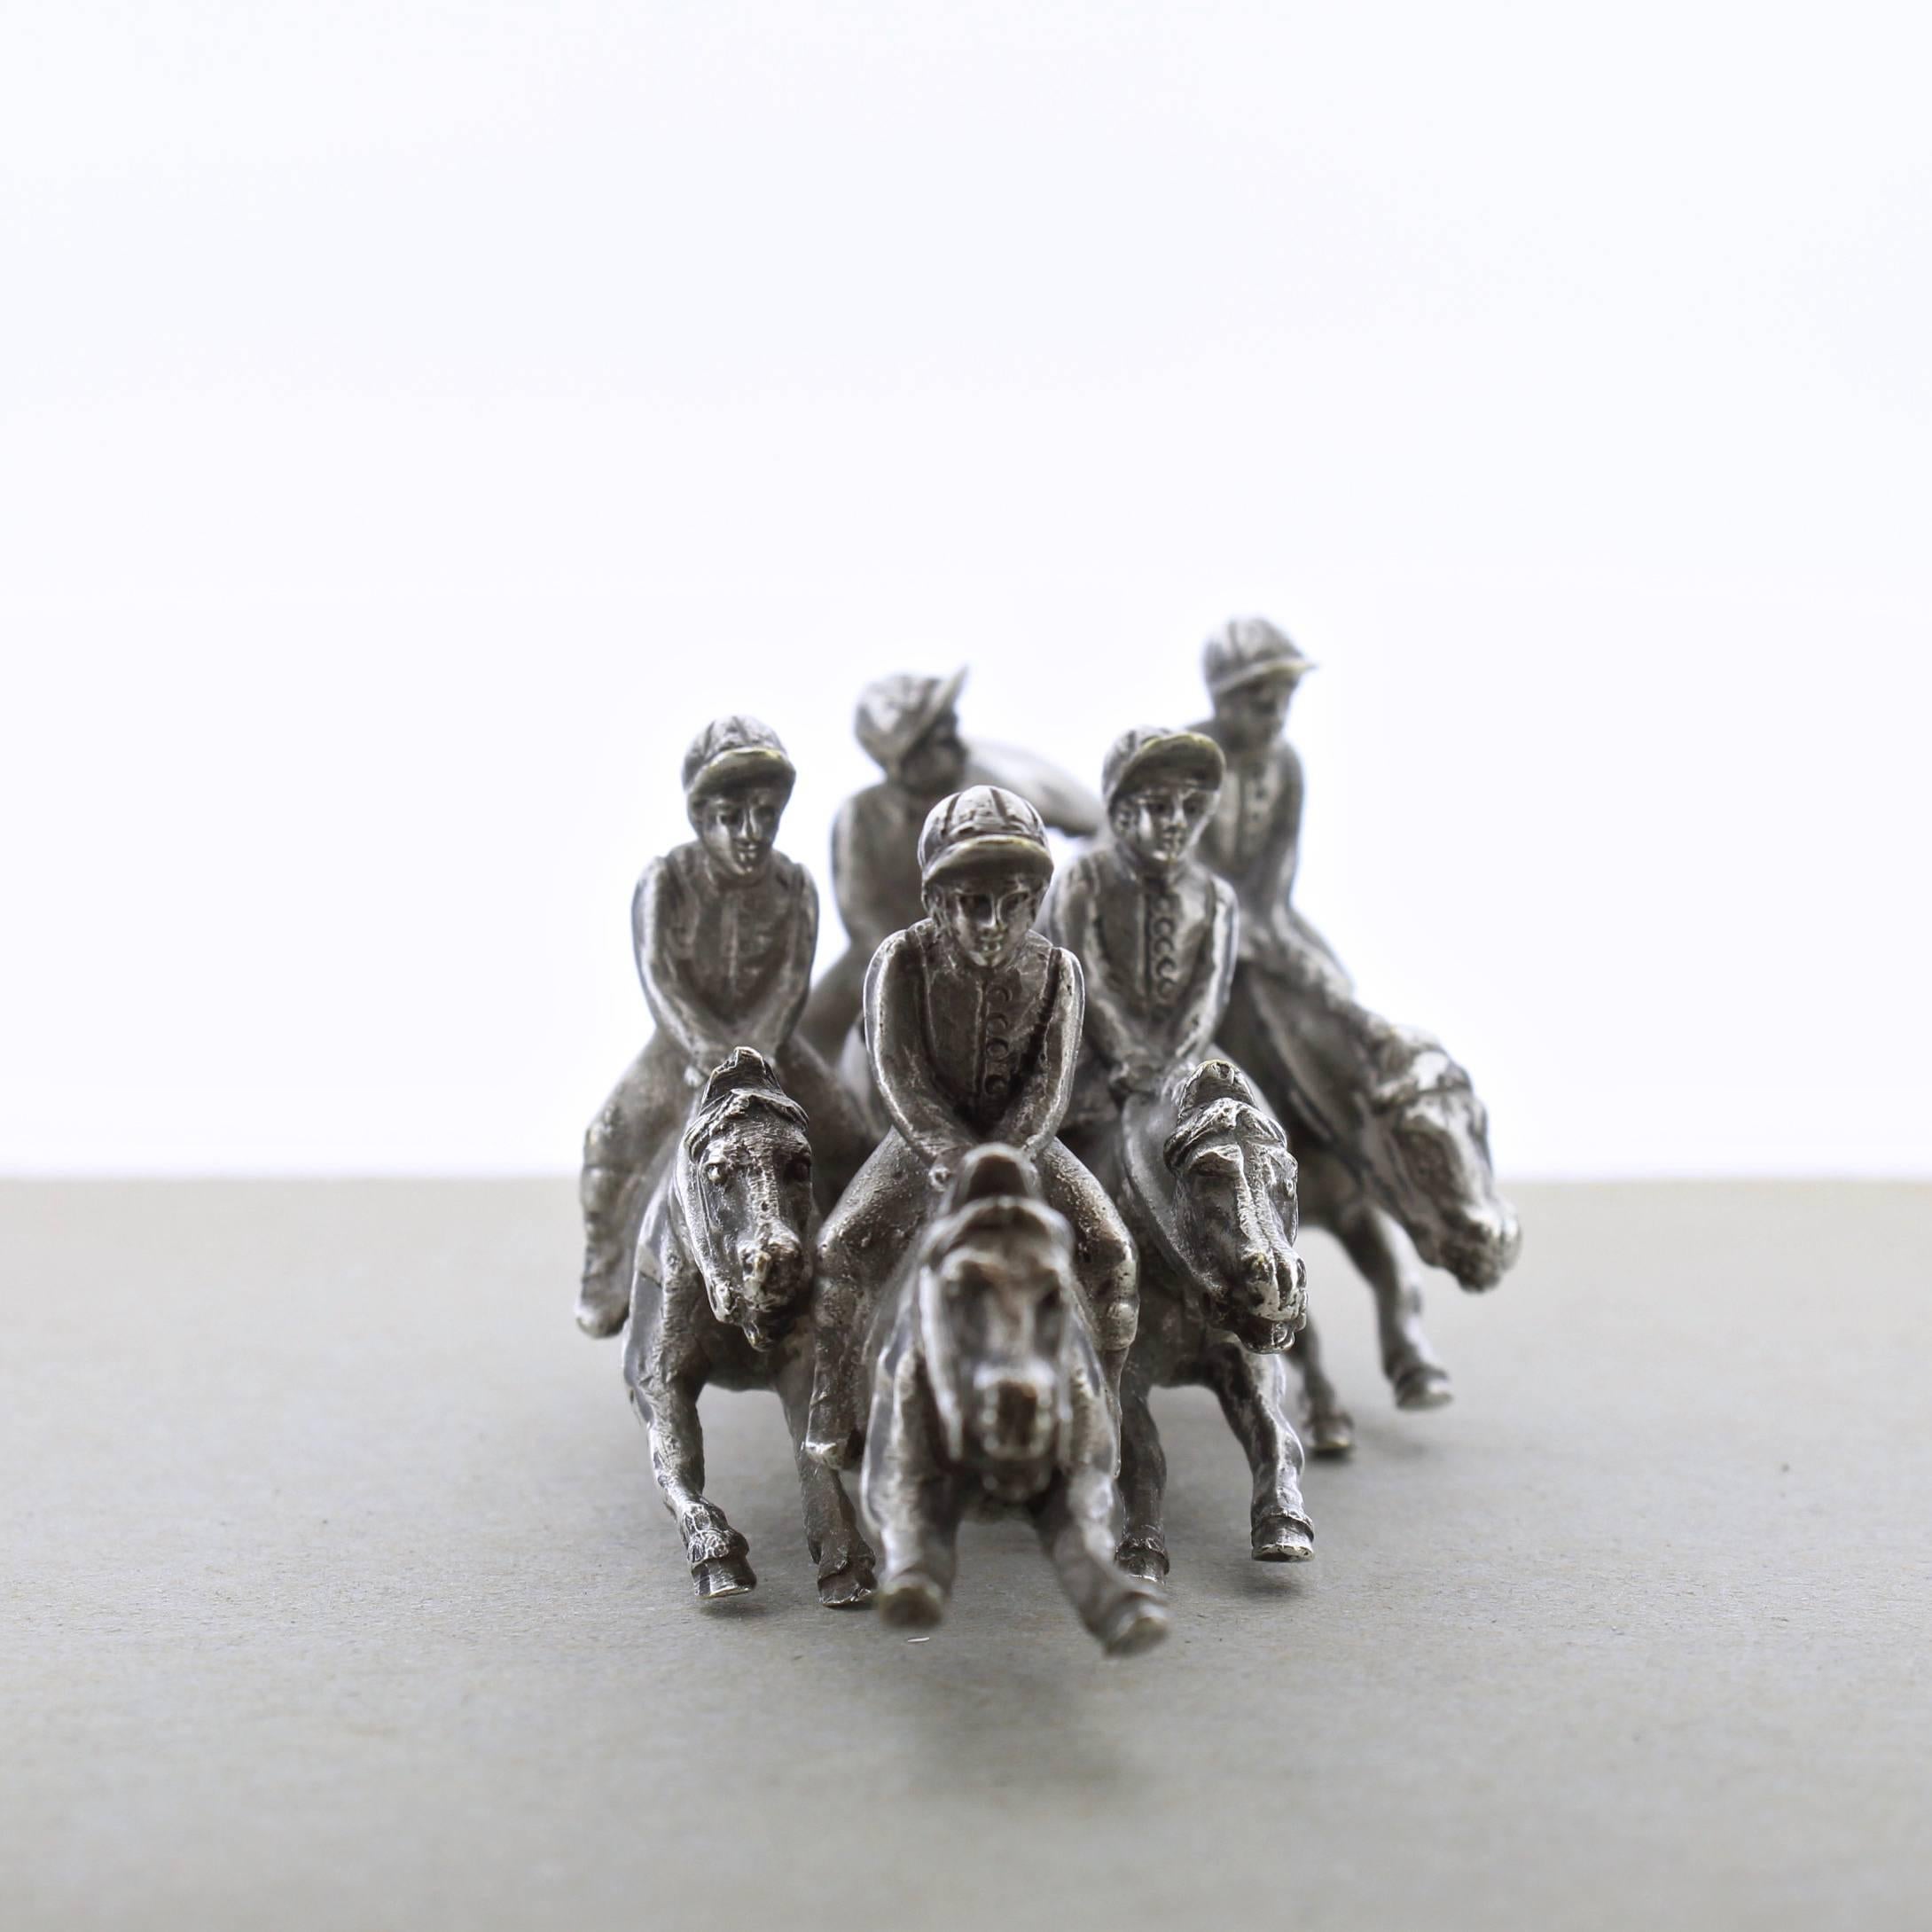 20th Century Fine Vintage Silverplate Miniature Horse Racing Sculpture with Jockeys & Horses